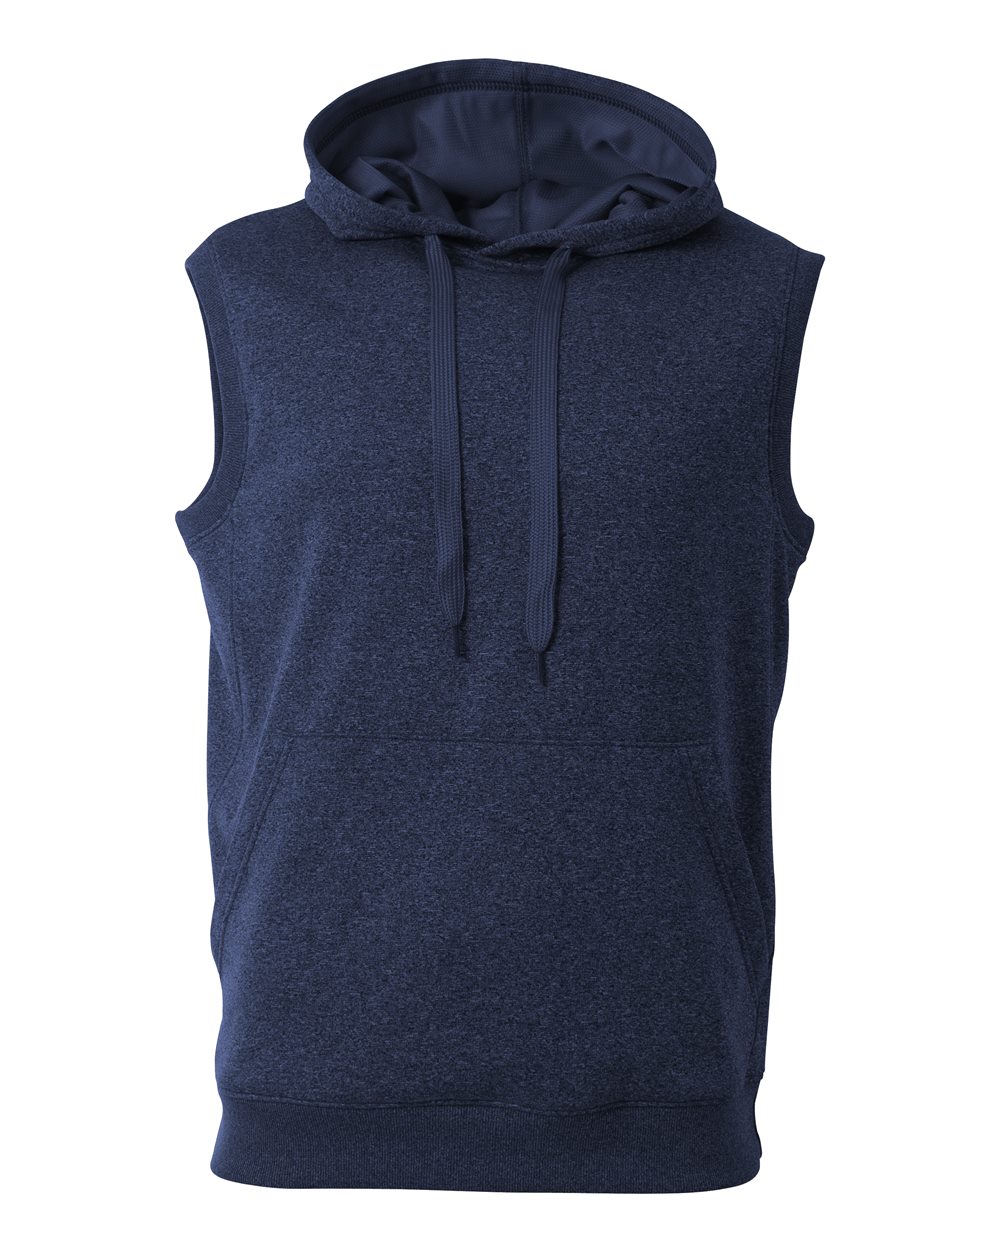 agility sleeveless hoodie navy heather